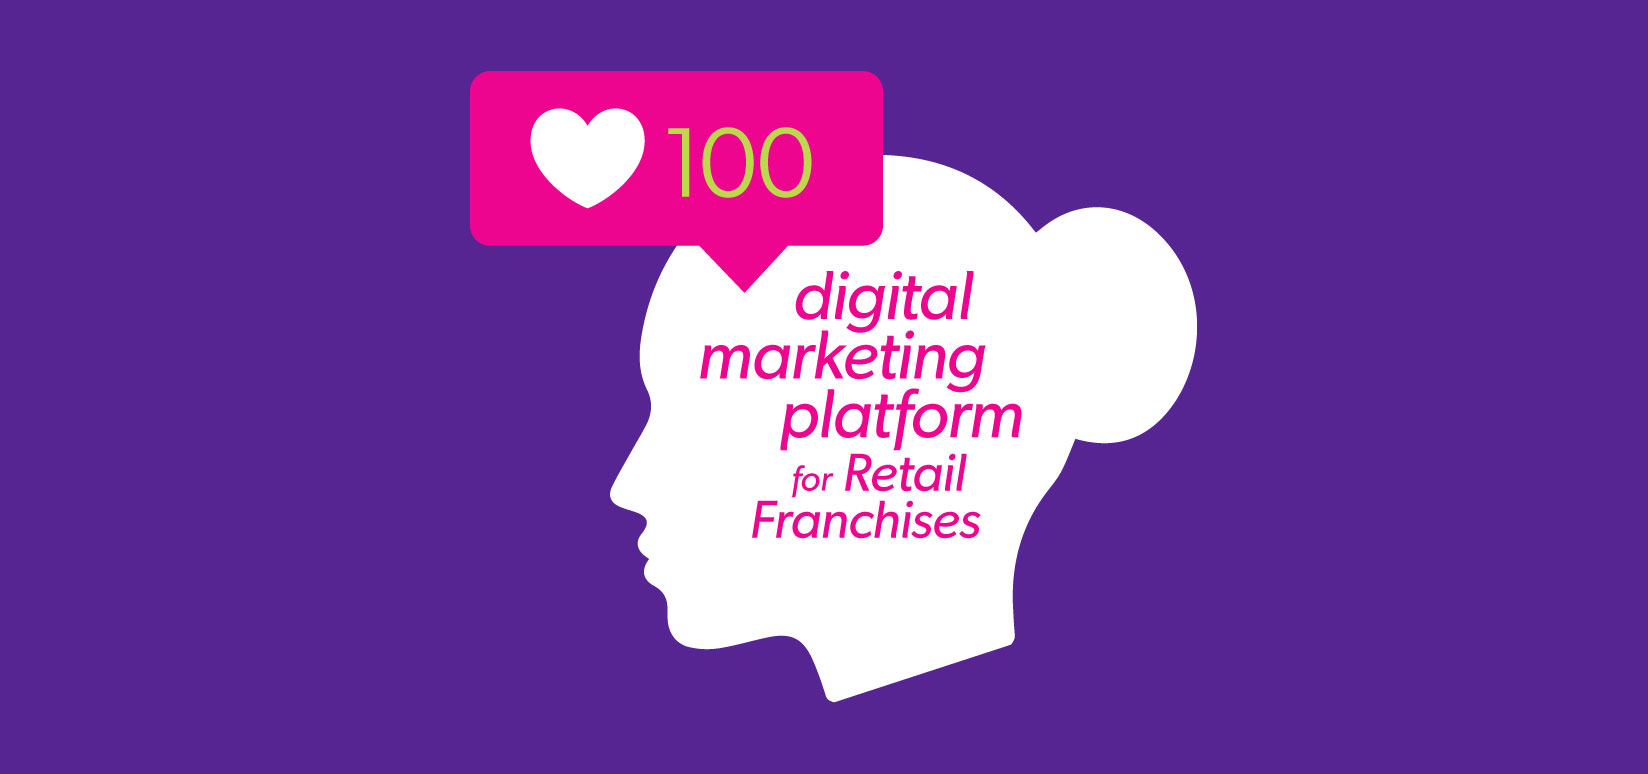 Is a digital marketing platform needed for Retail Franchises?